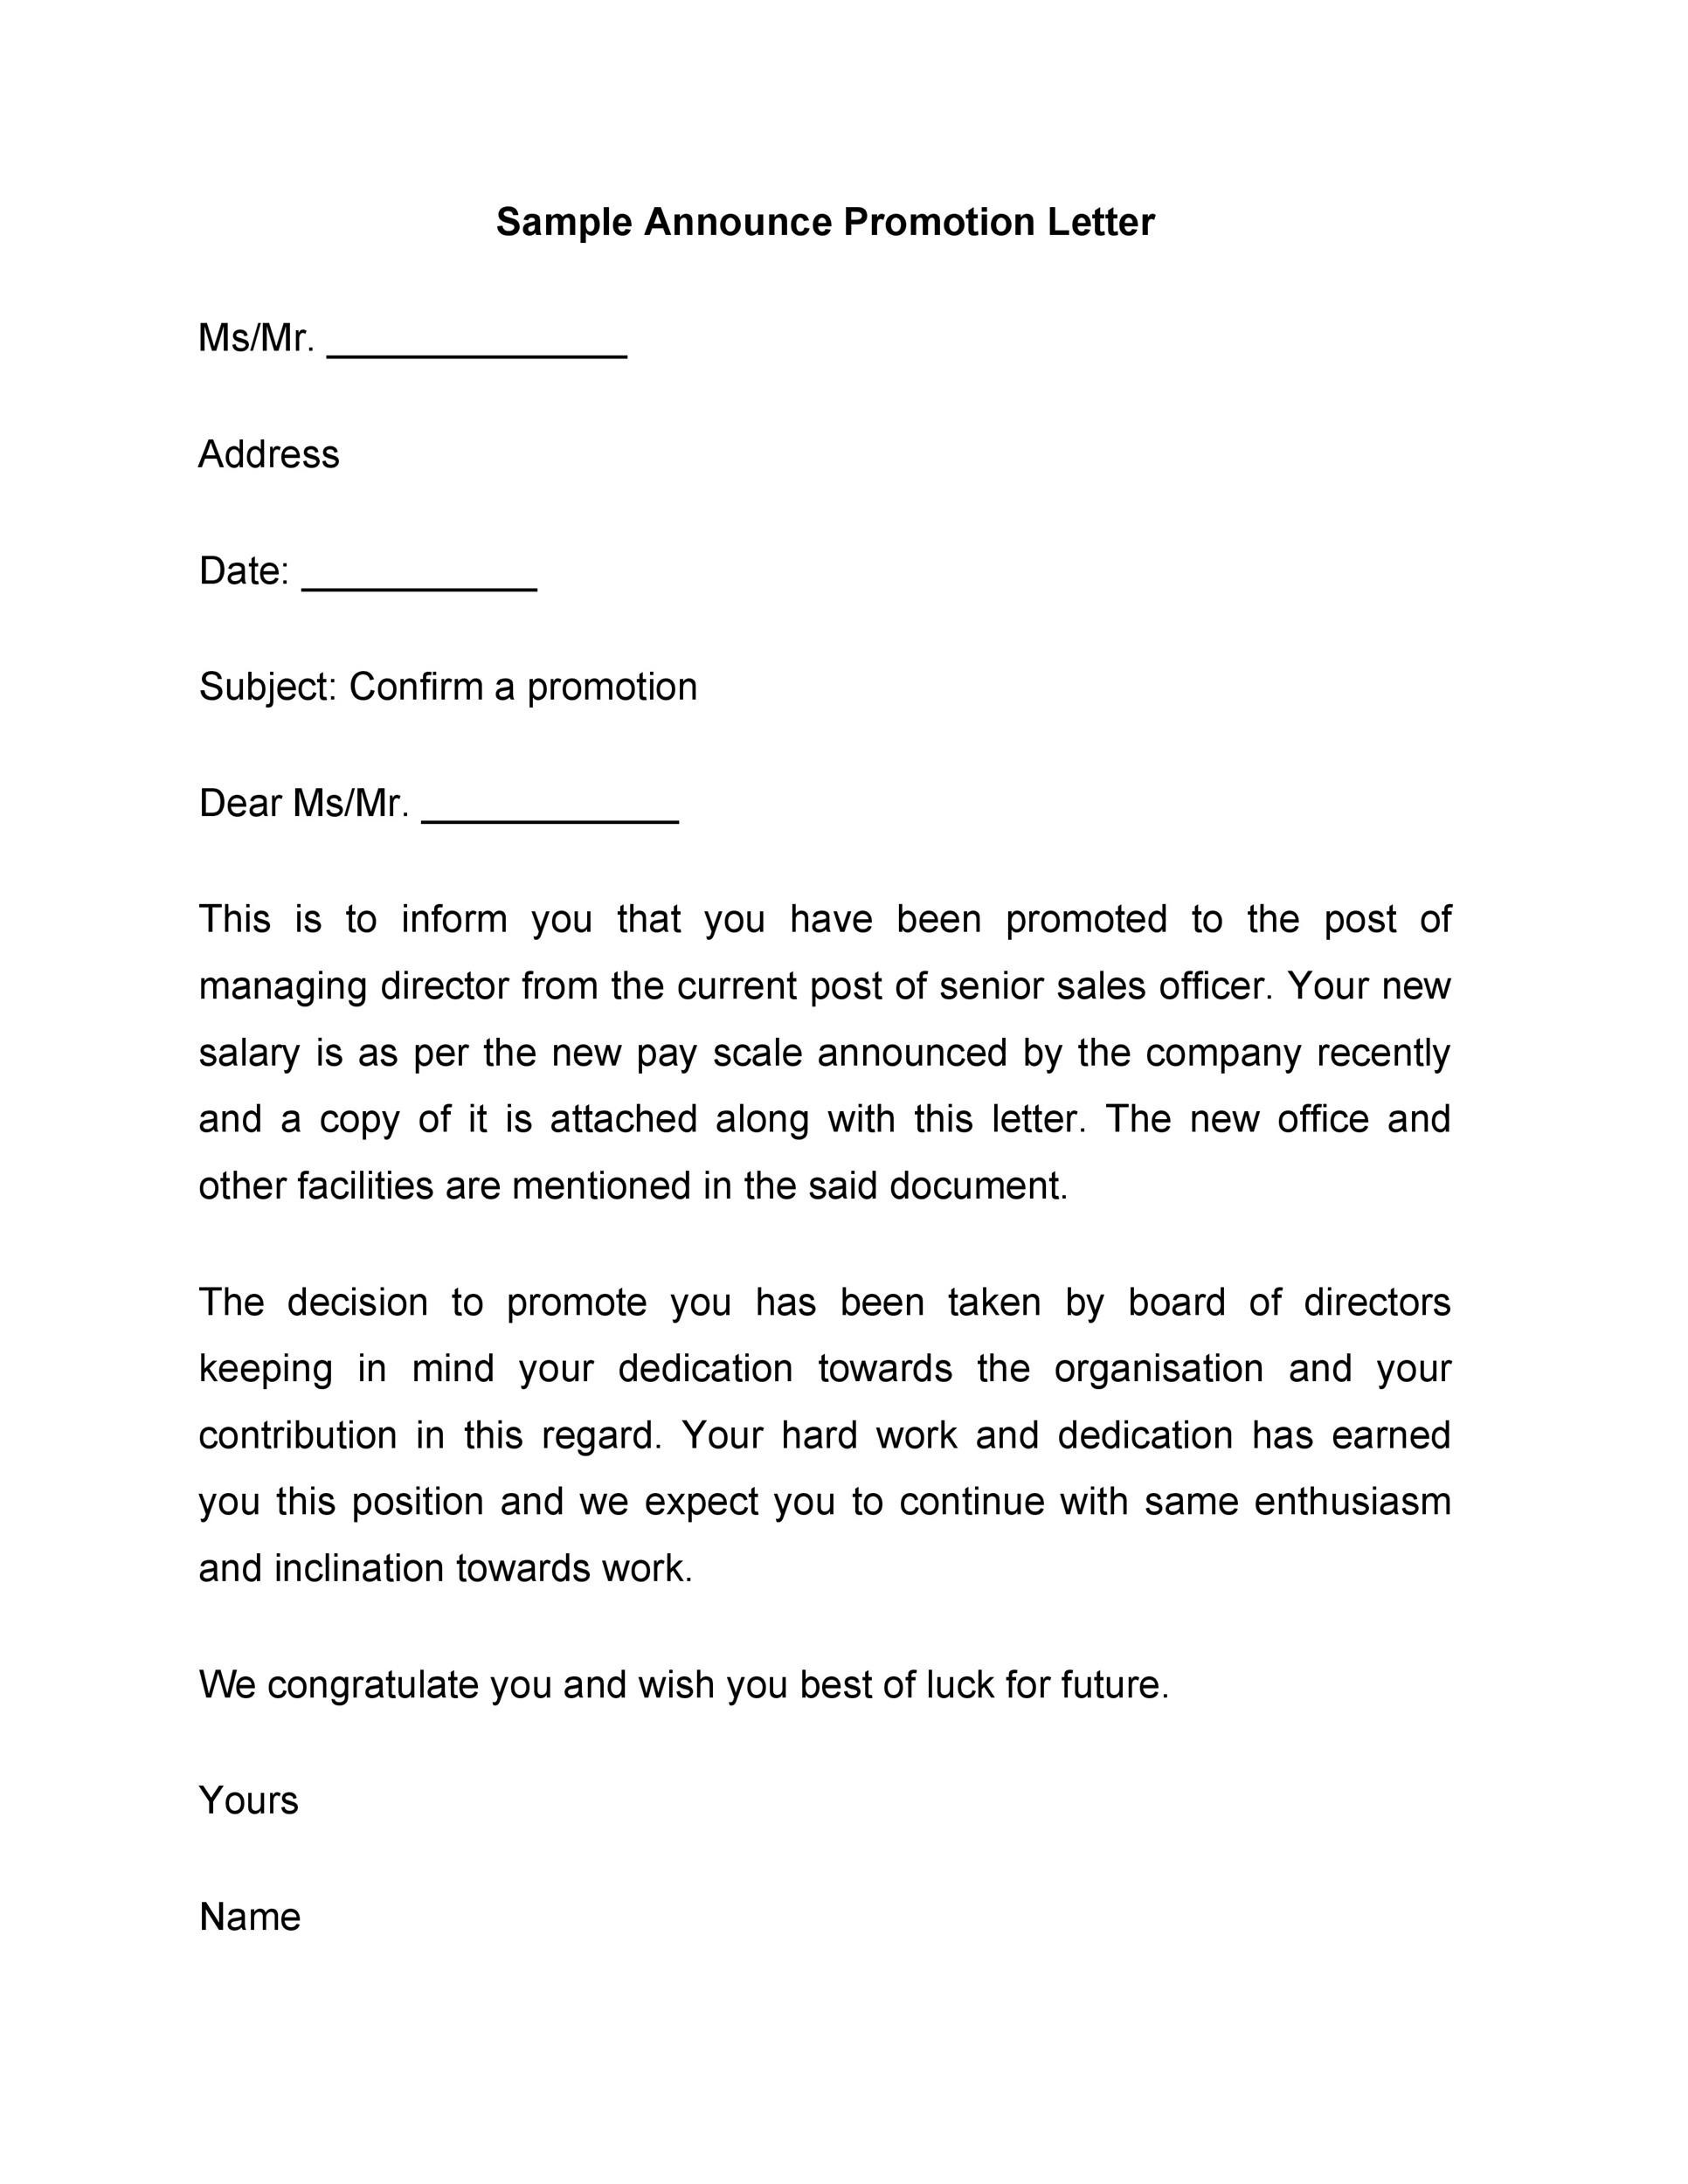 cover letter for promotion job